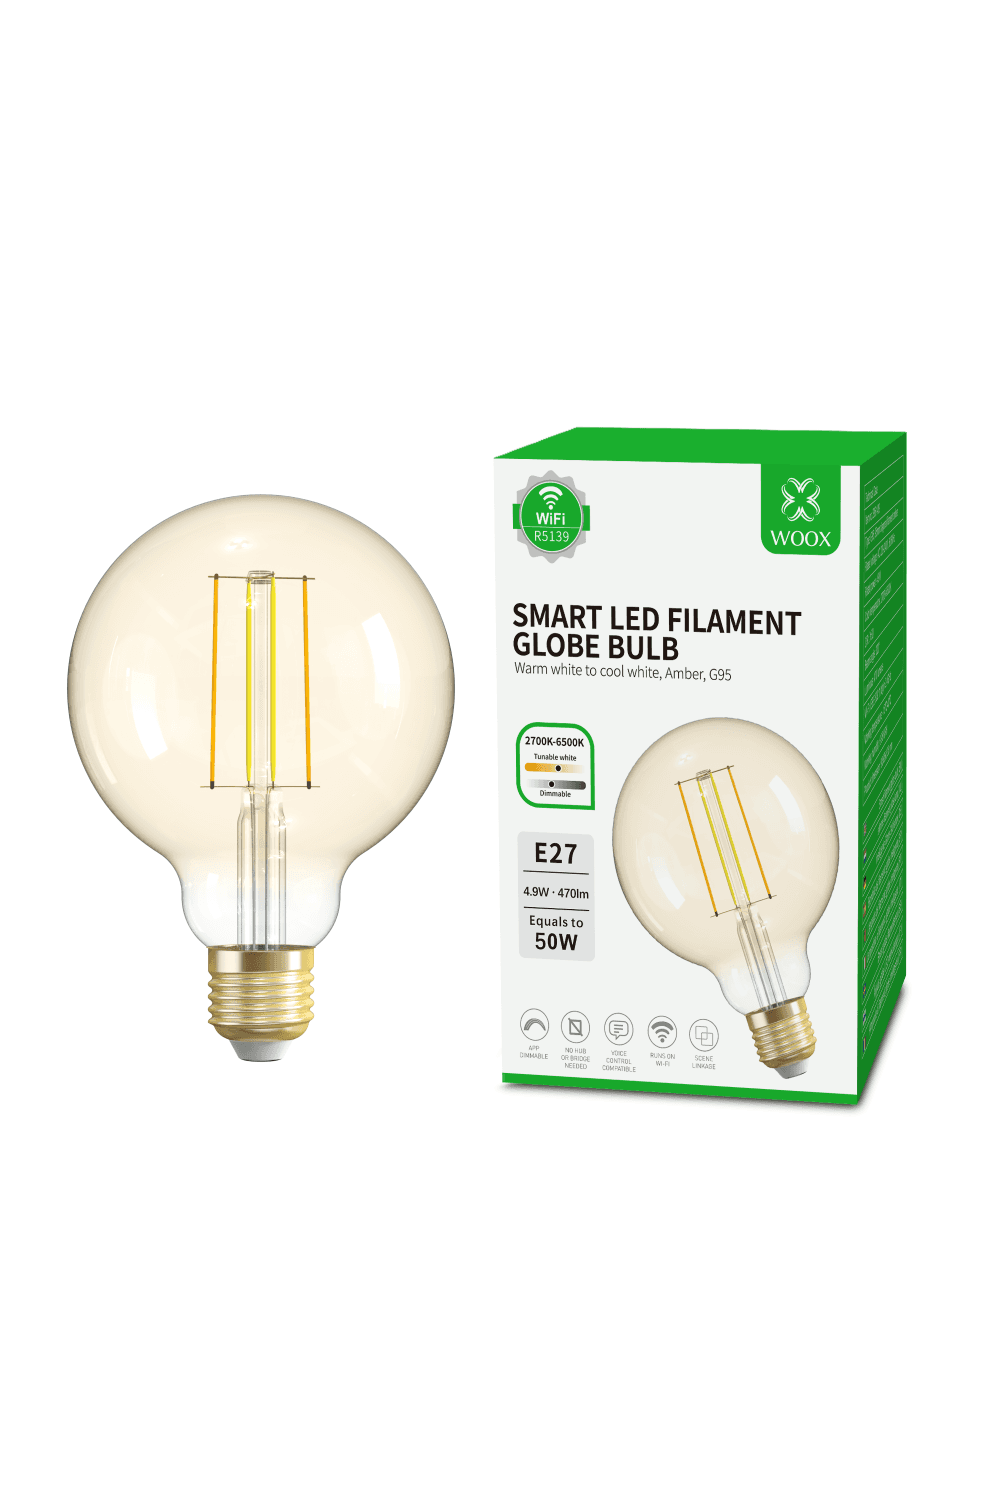 Woox R5139 Slimme filament E27 lamp